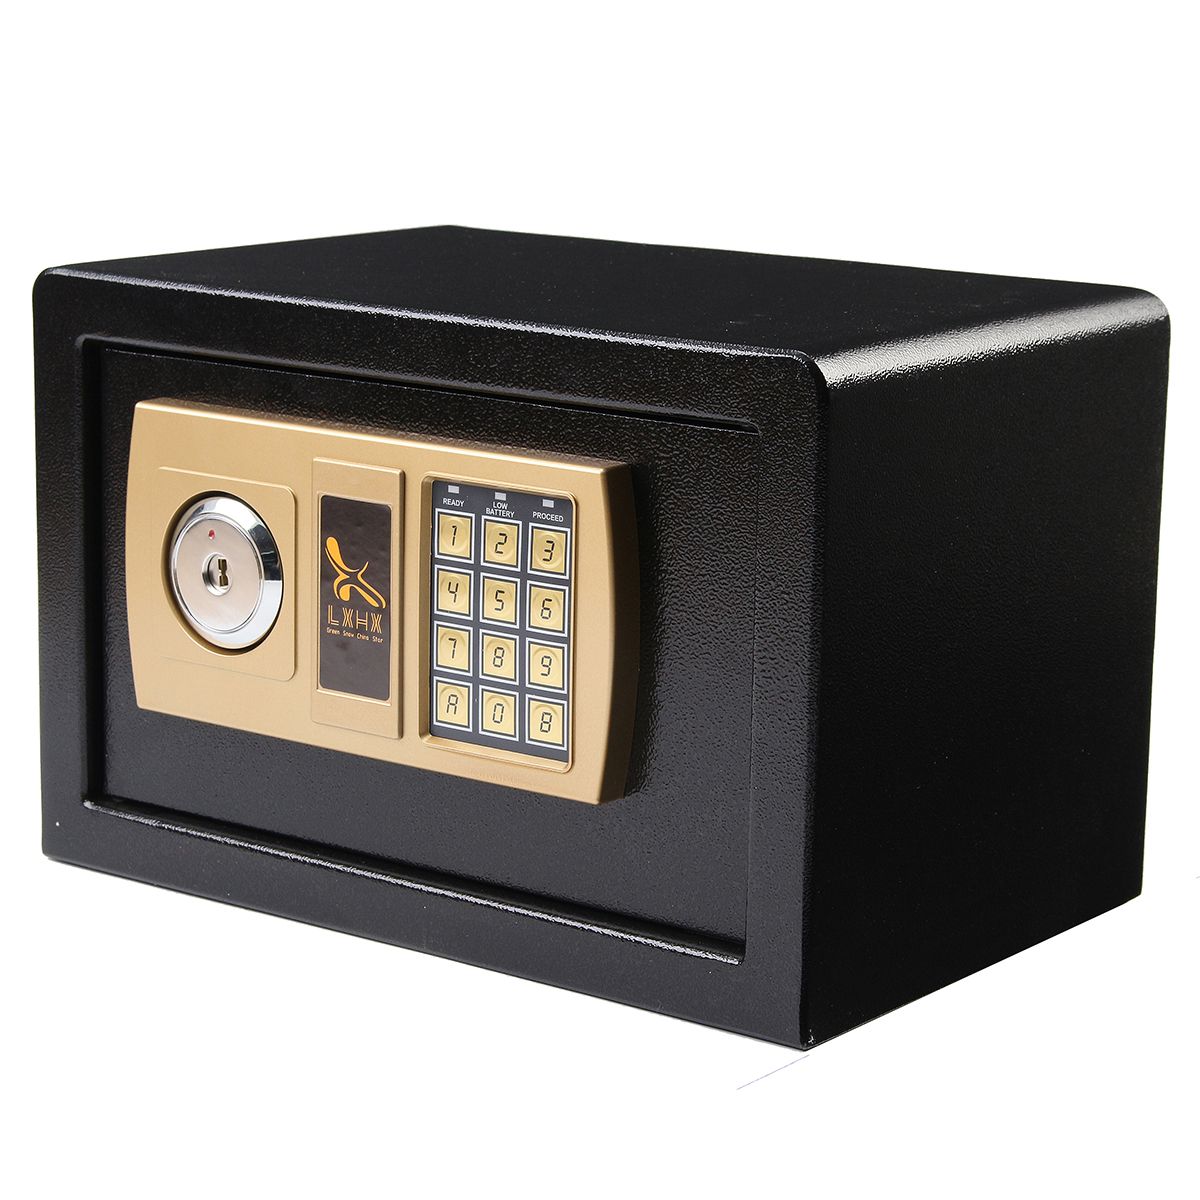 Digital-Depository-Drop-Cash-Safe-Box-Jewelry-Home-Hotel-Lock-Keypad-Black-1317199